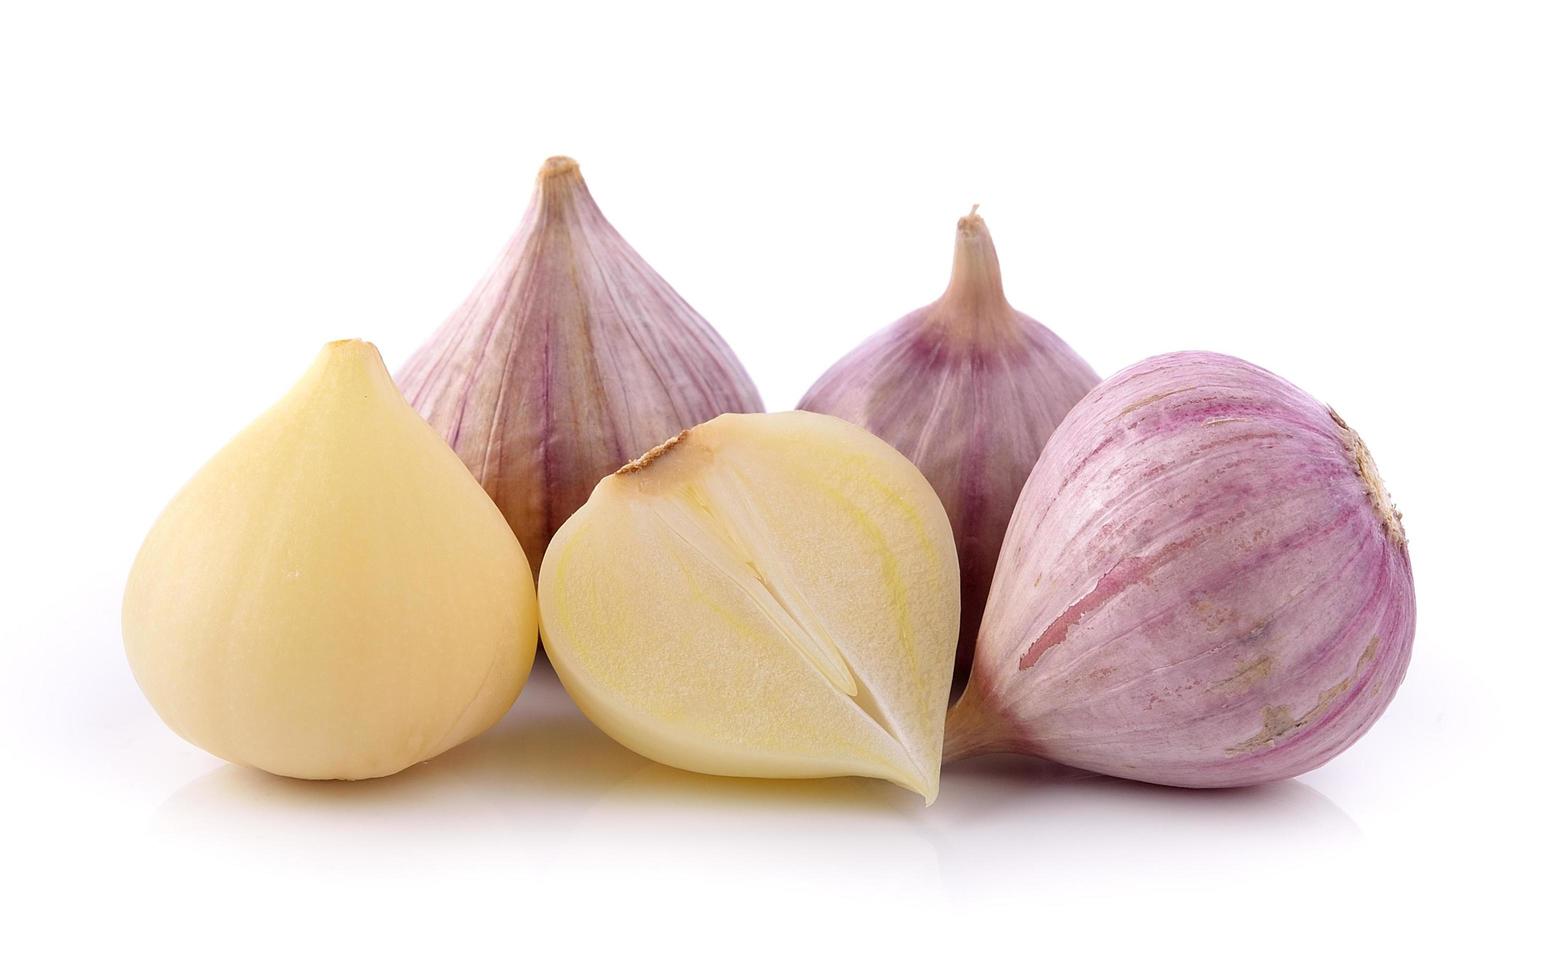 Garlic on white background photo